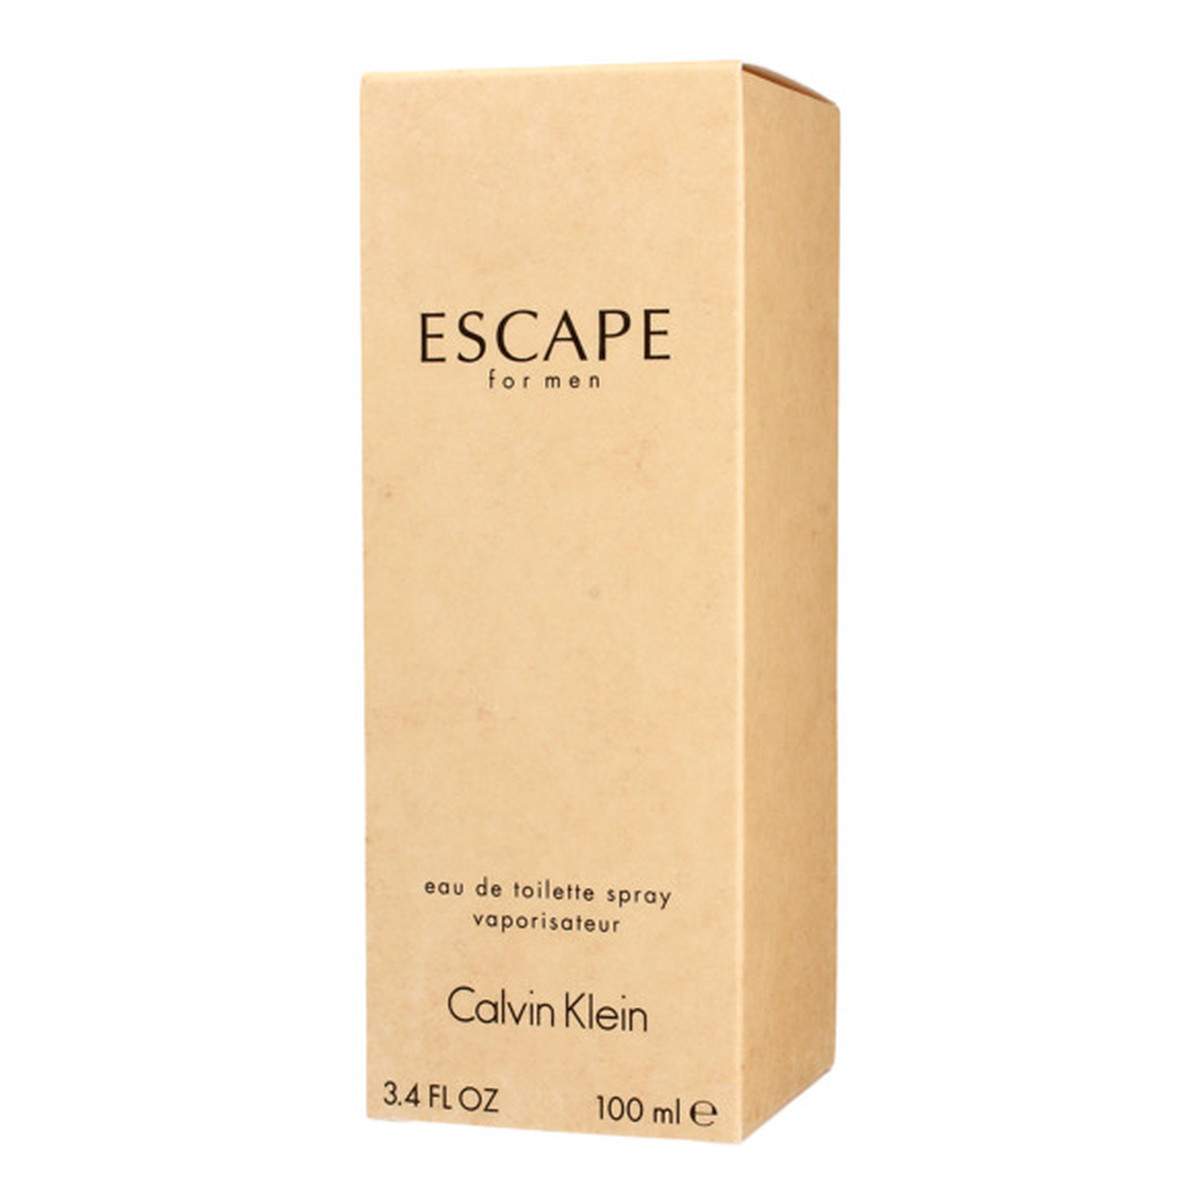 Calvin Klein Escape for Men woda toaletowa dla mężczyzn 100ml